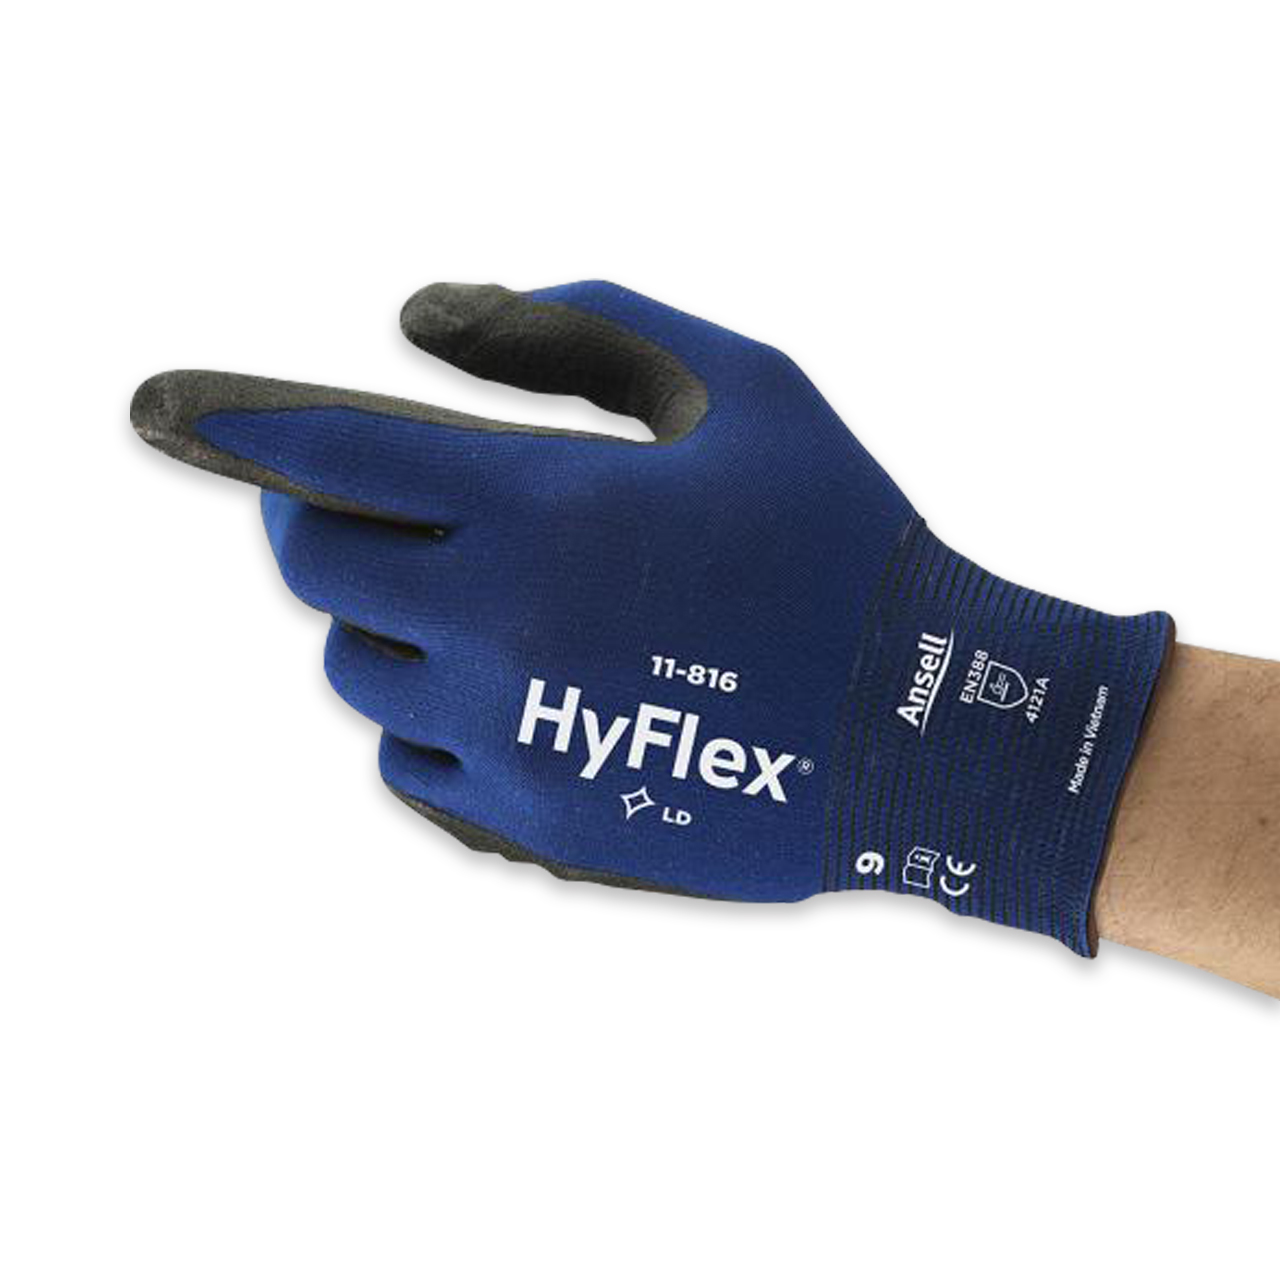 HyFlex® 11-816 Gr. 9/L